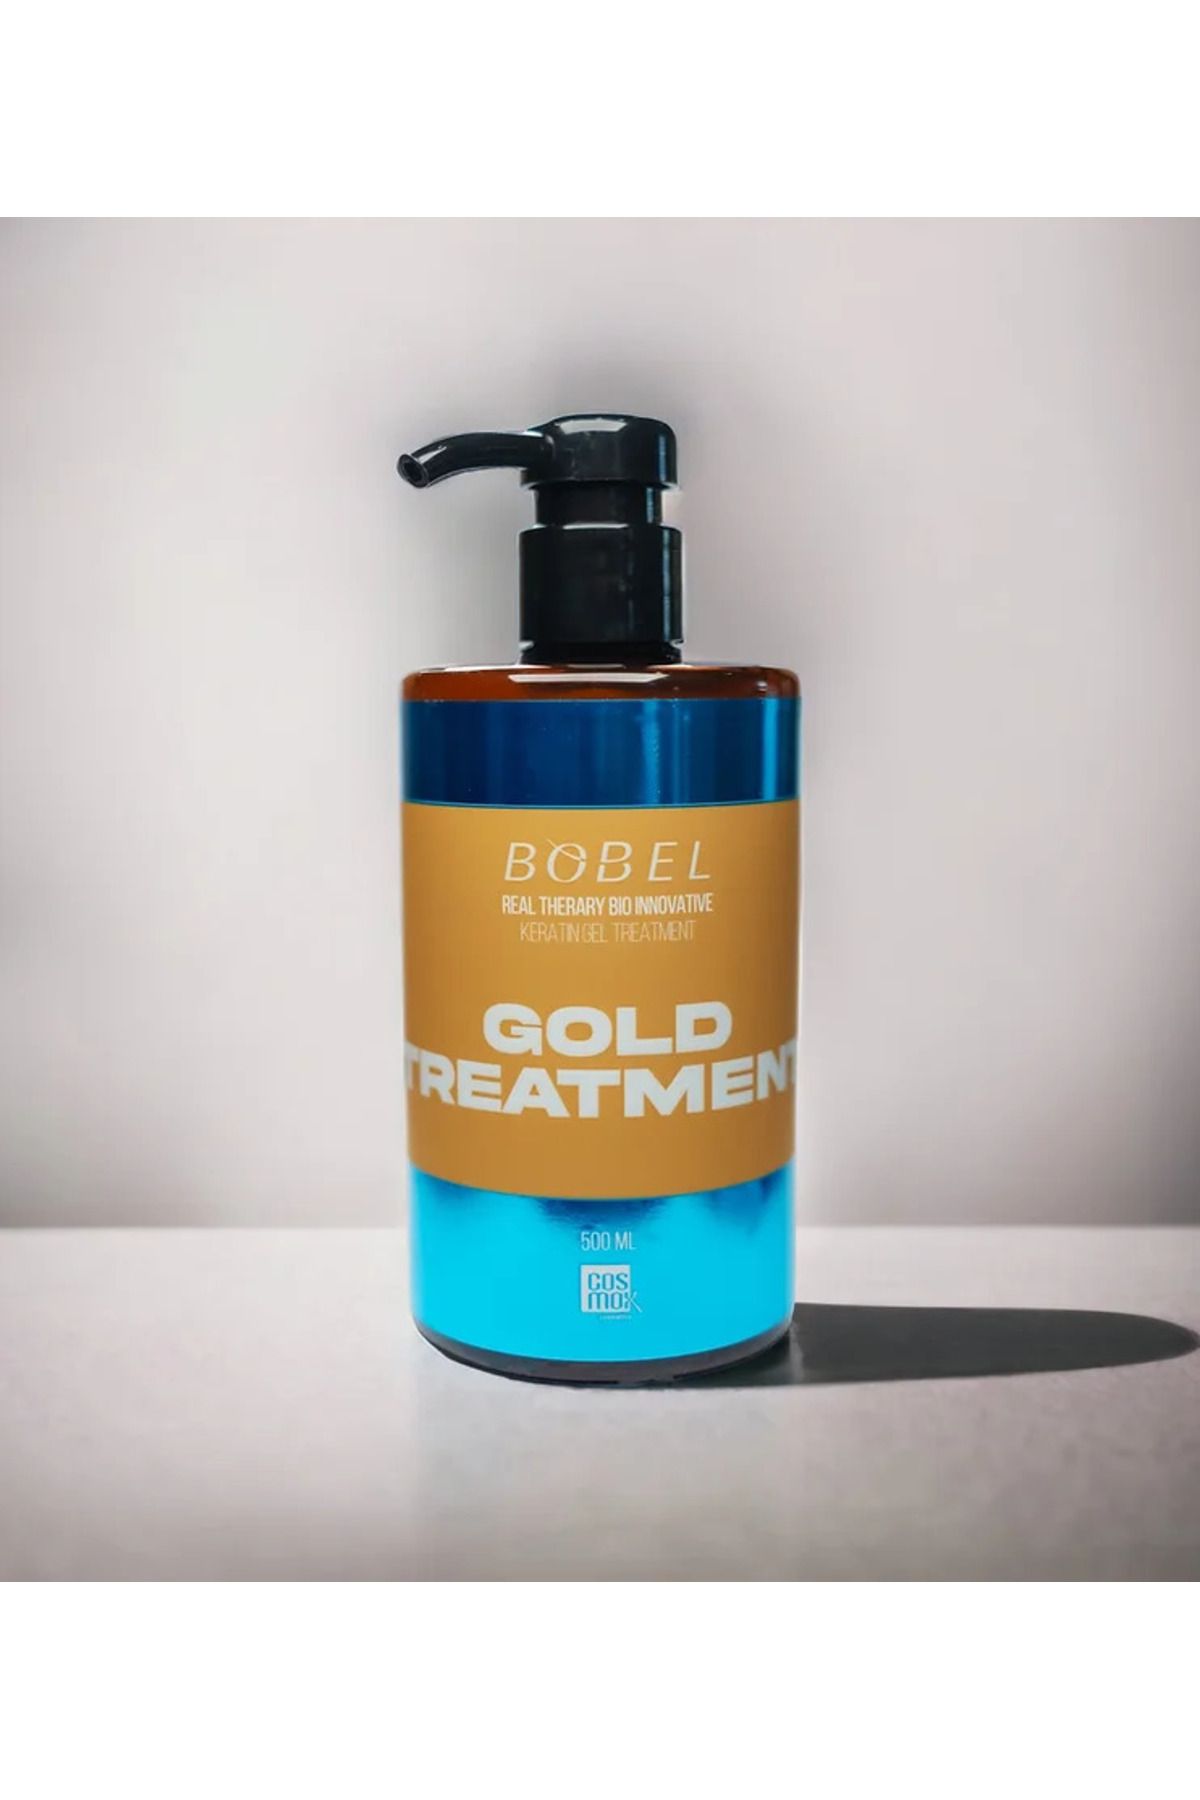 bobel ® Sarı Şişe Jel Keratin Terapi (GT-GOLD TREATMENT) - 500 ml